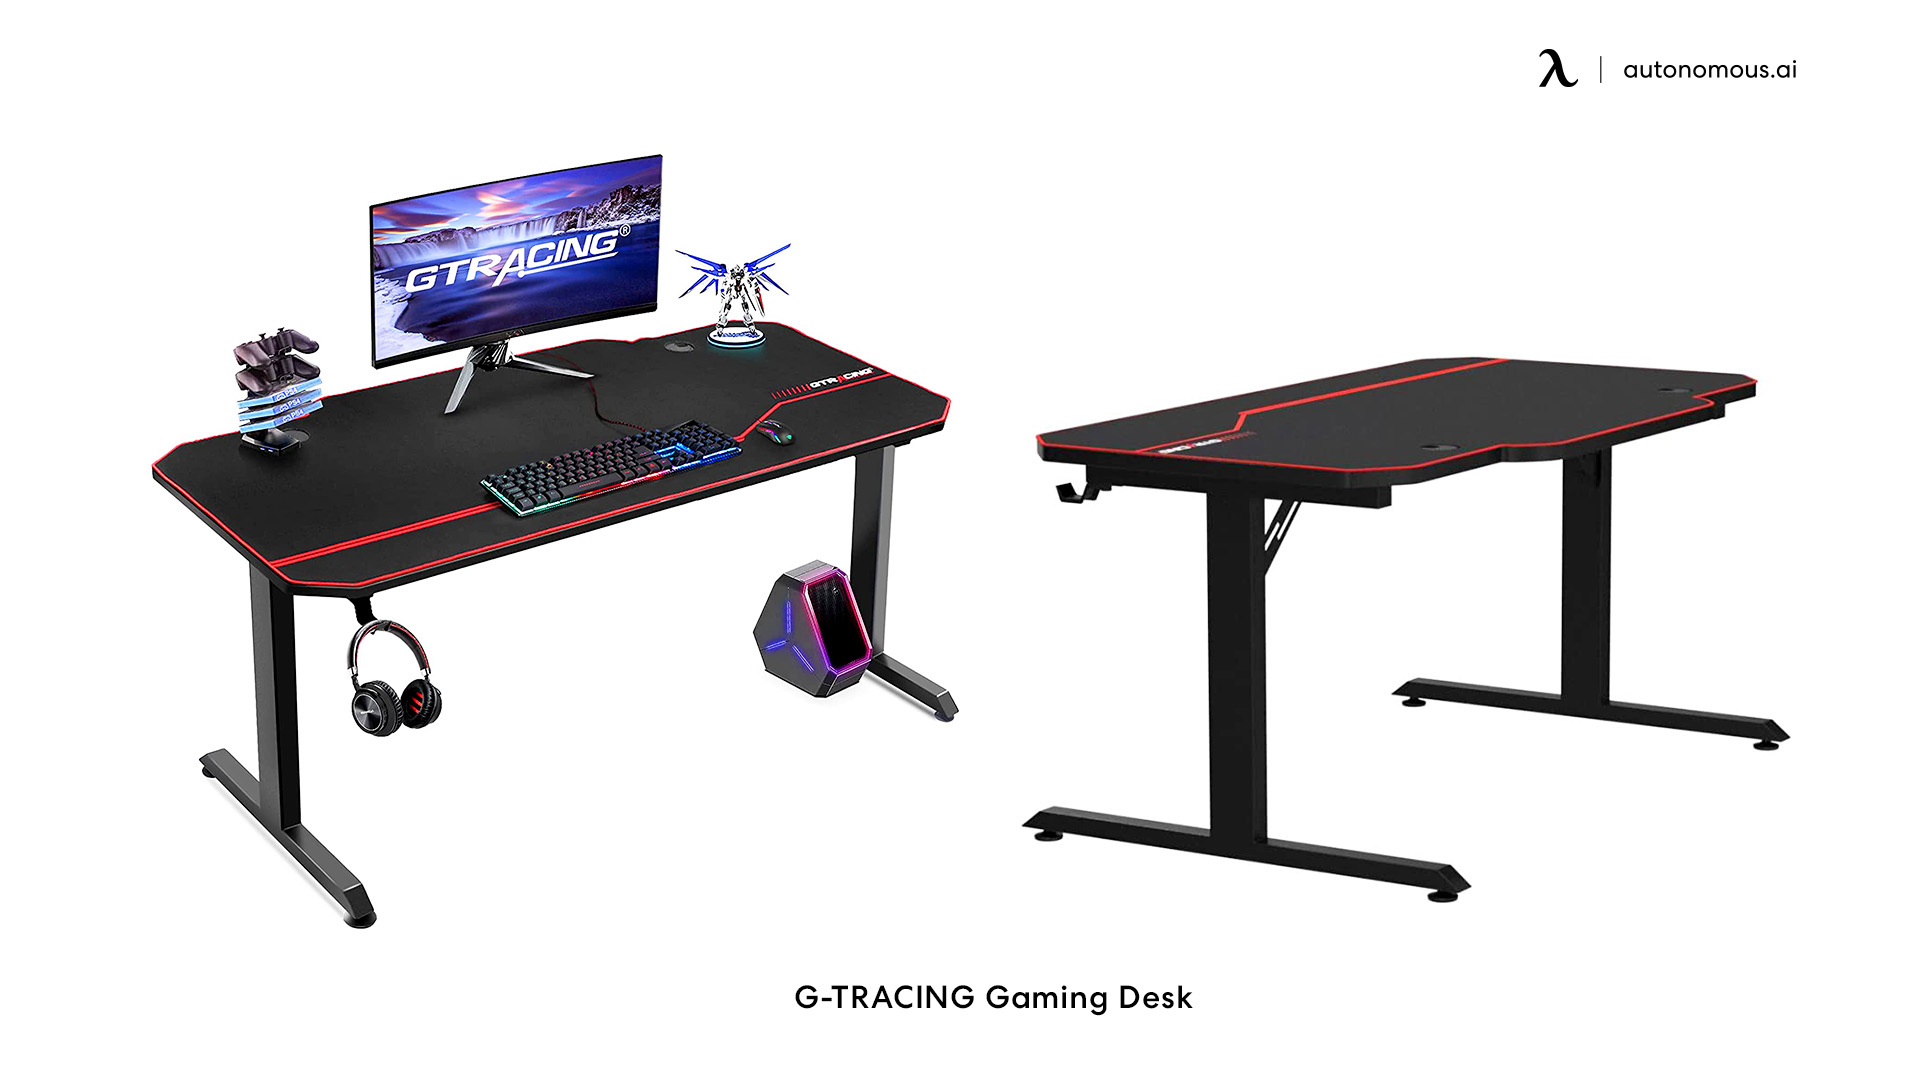 G-TRACING cheap gaming desk